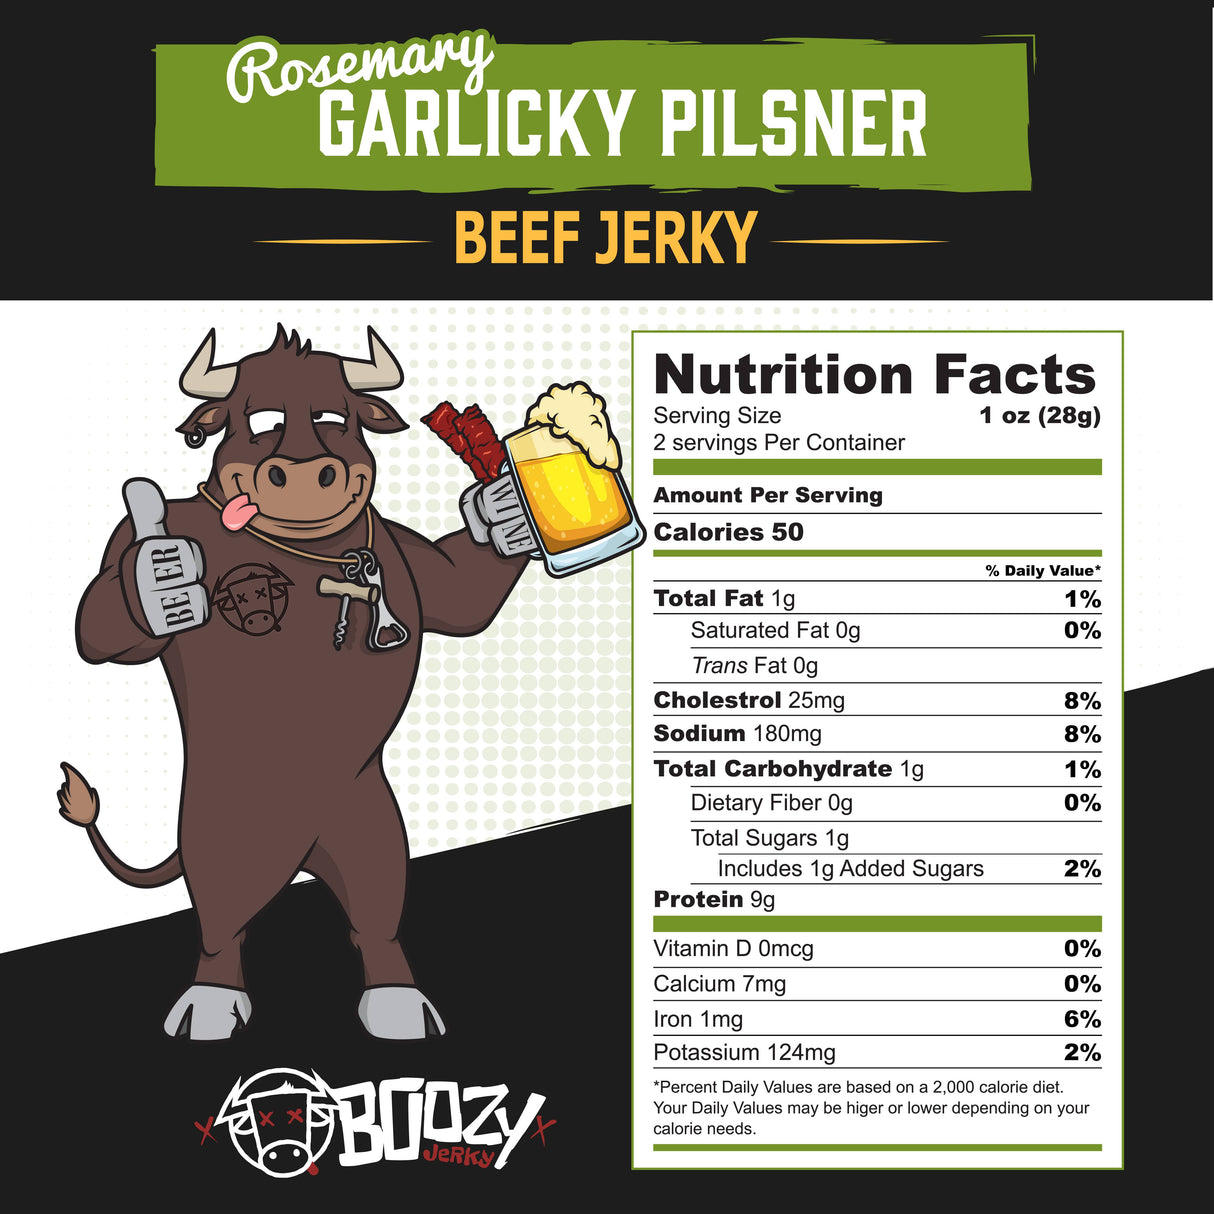 Boozy Jerky - Rosemary Garlicky Pilsner Beef Jerky